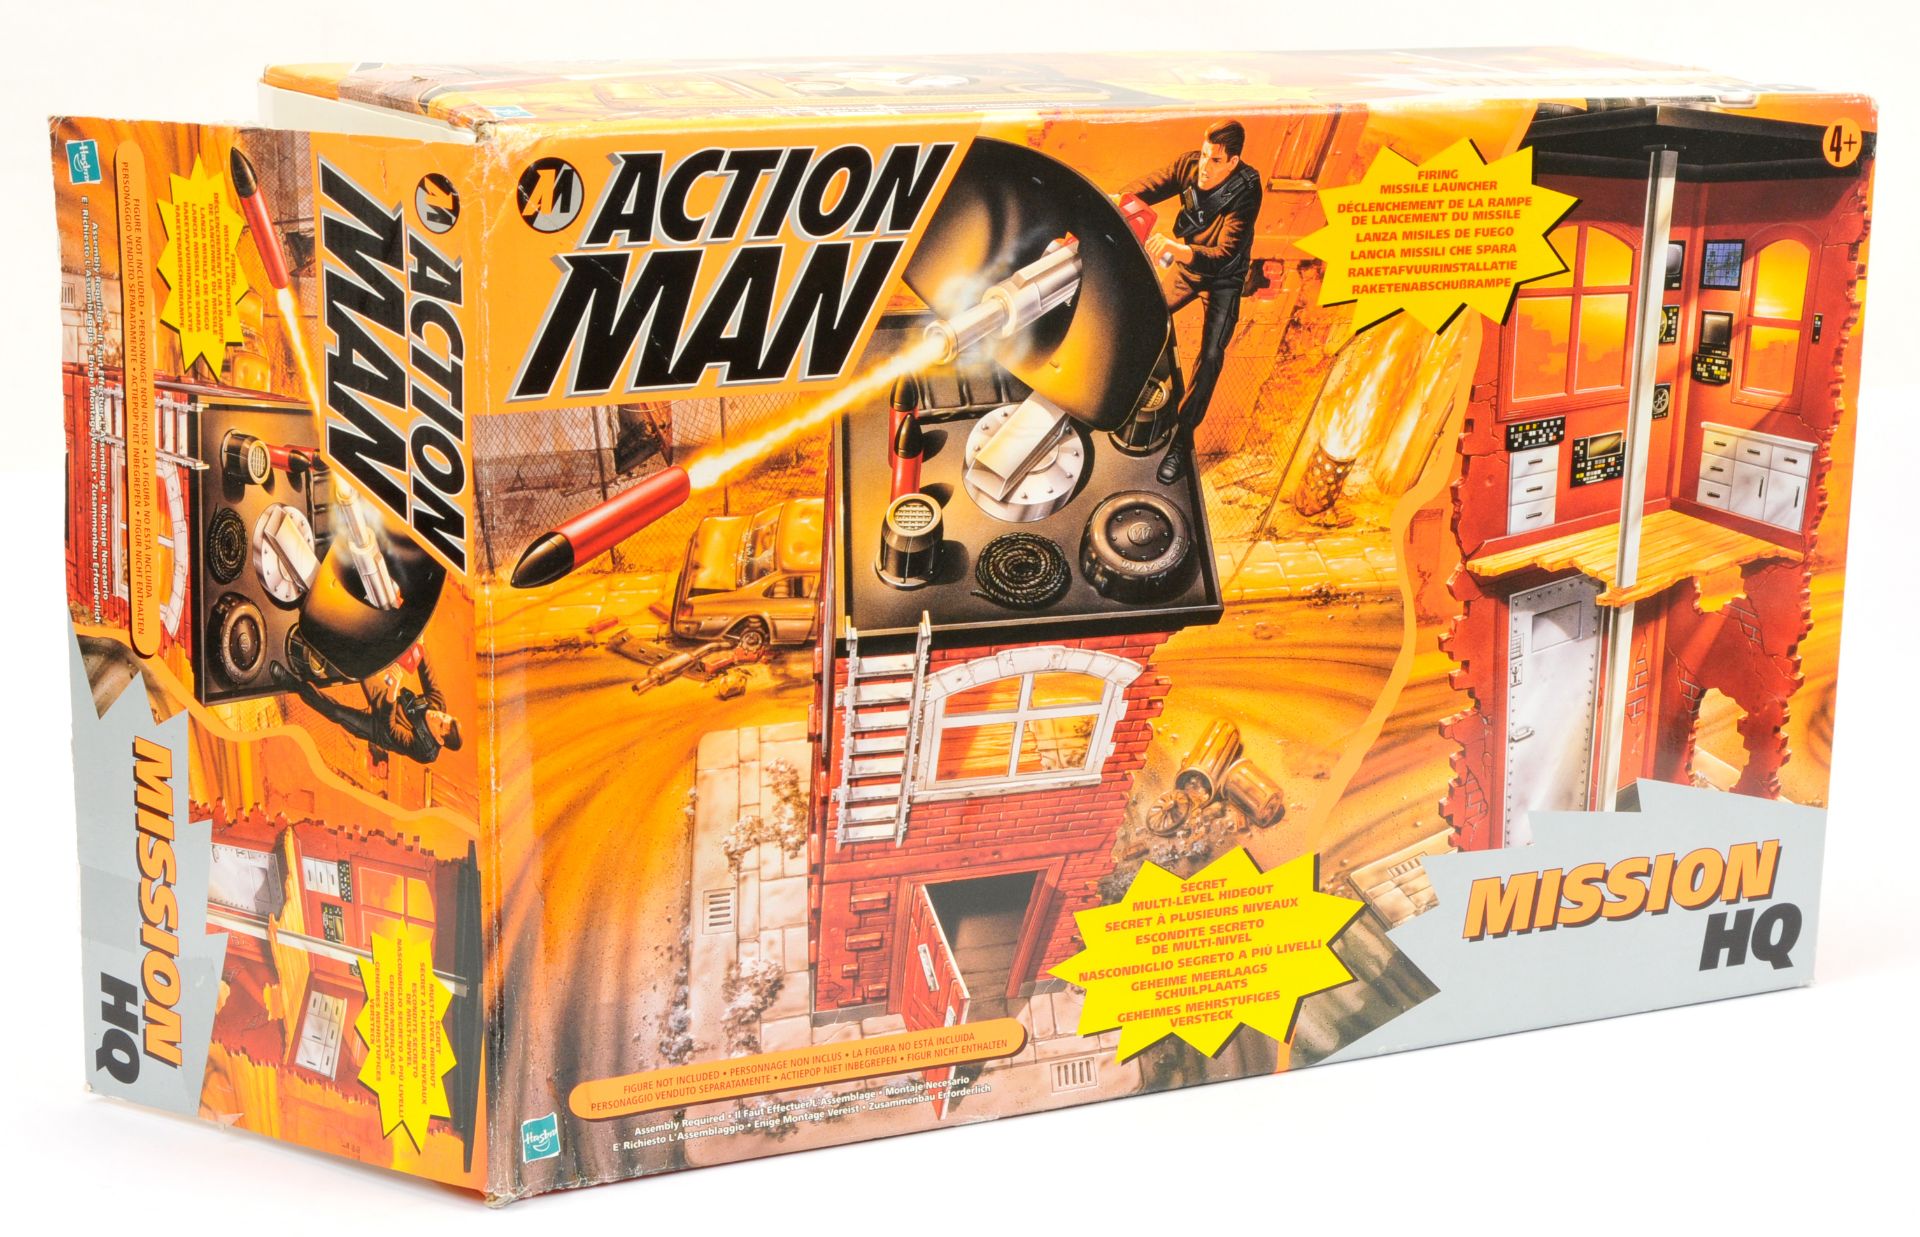 Hasbro modern Action Man Mission HQ play-set